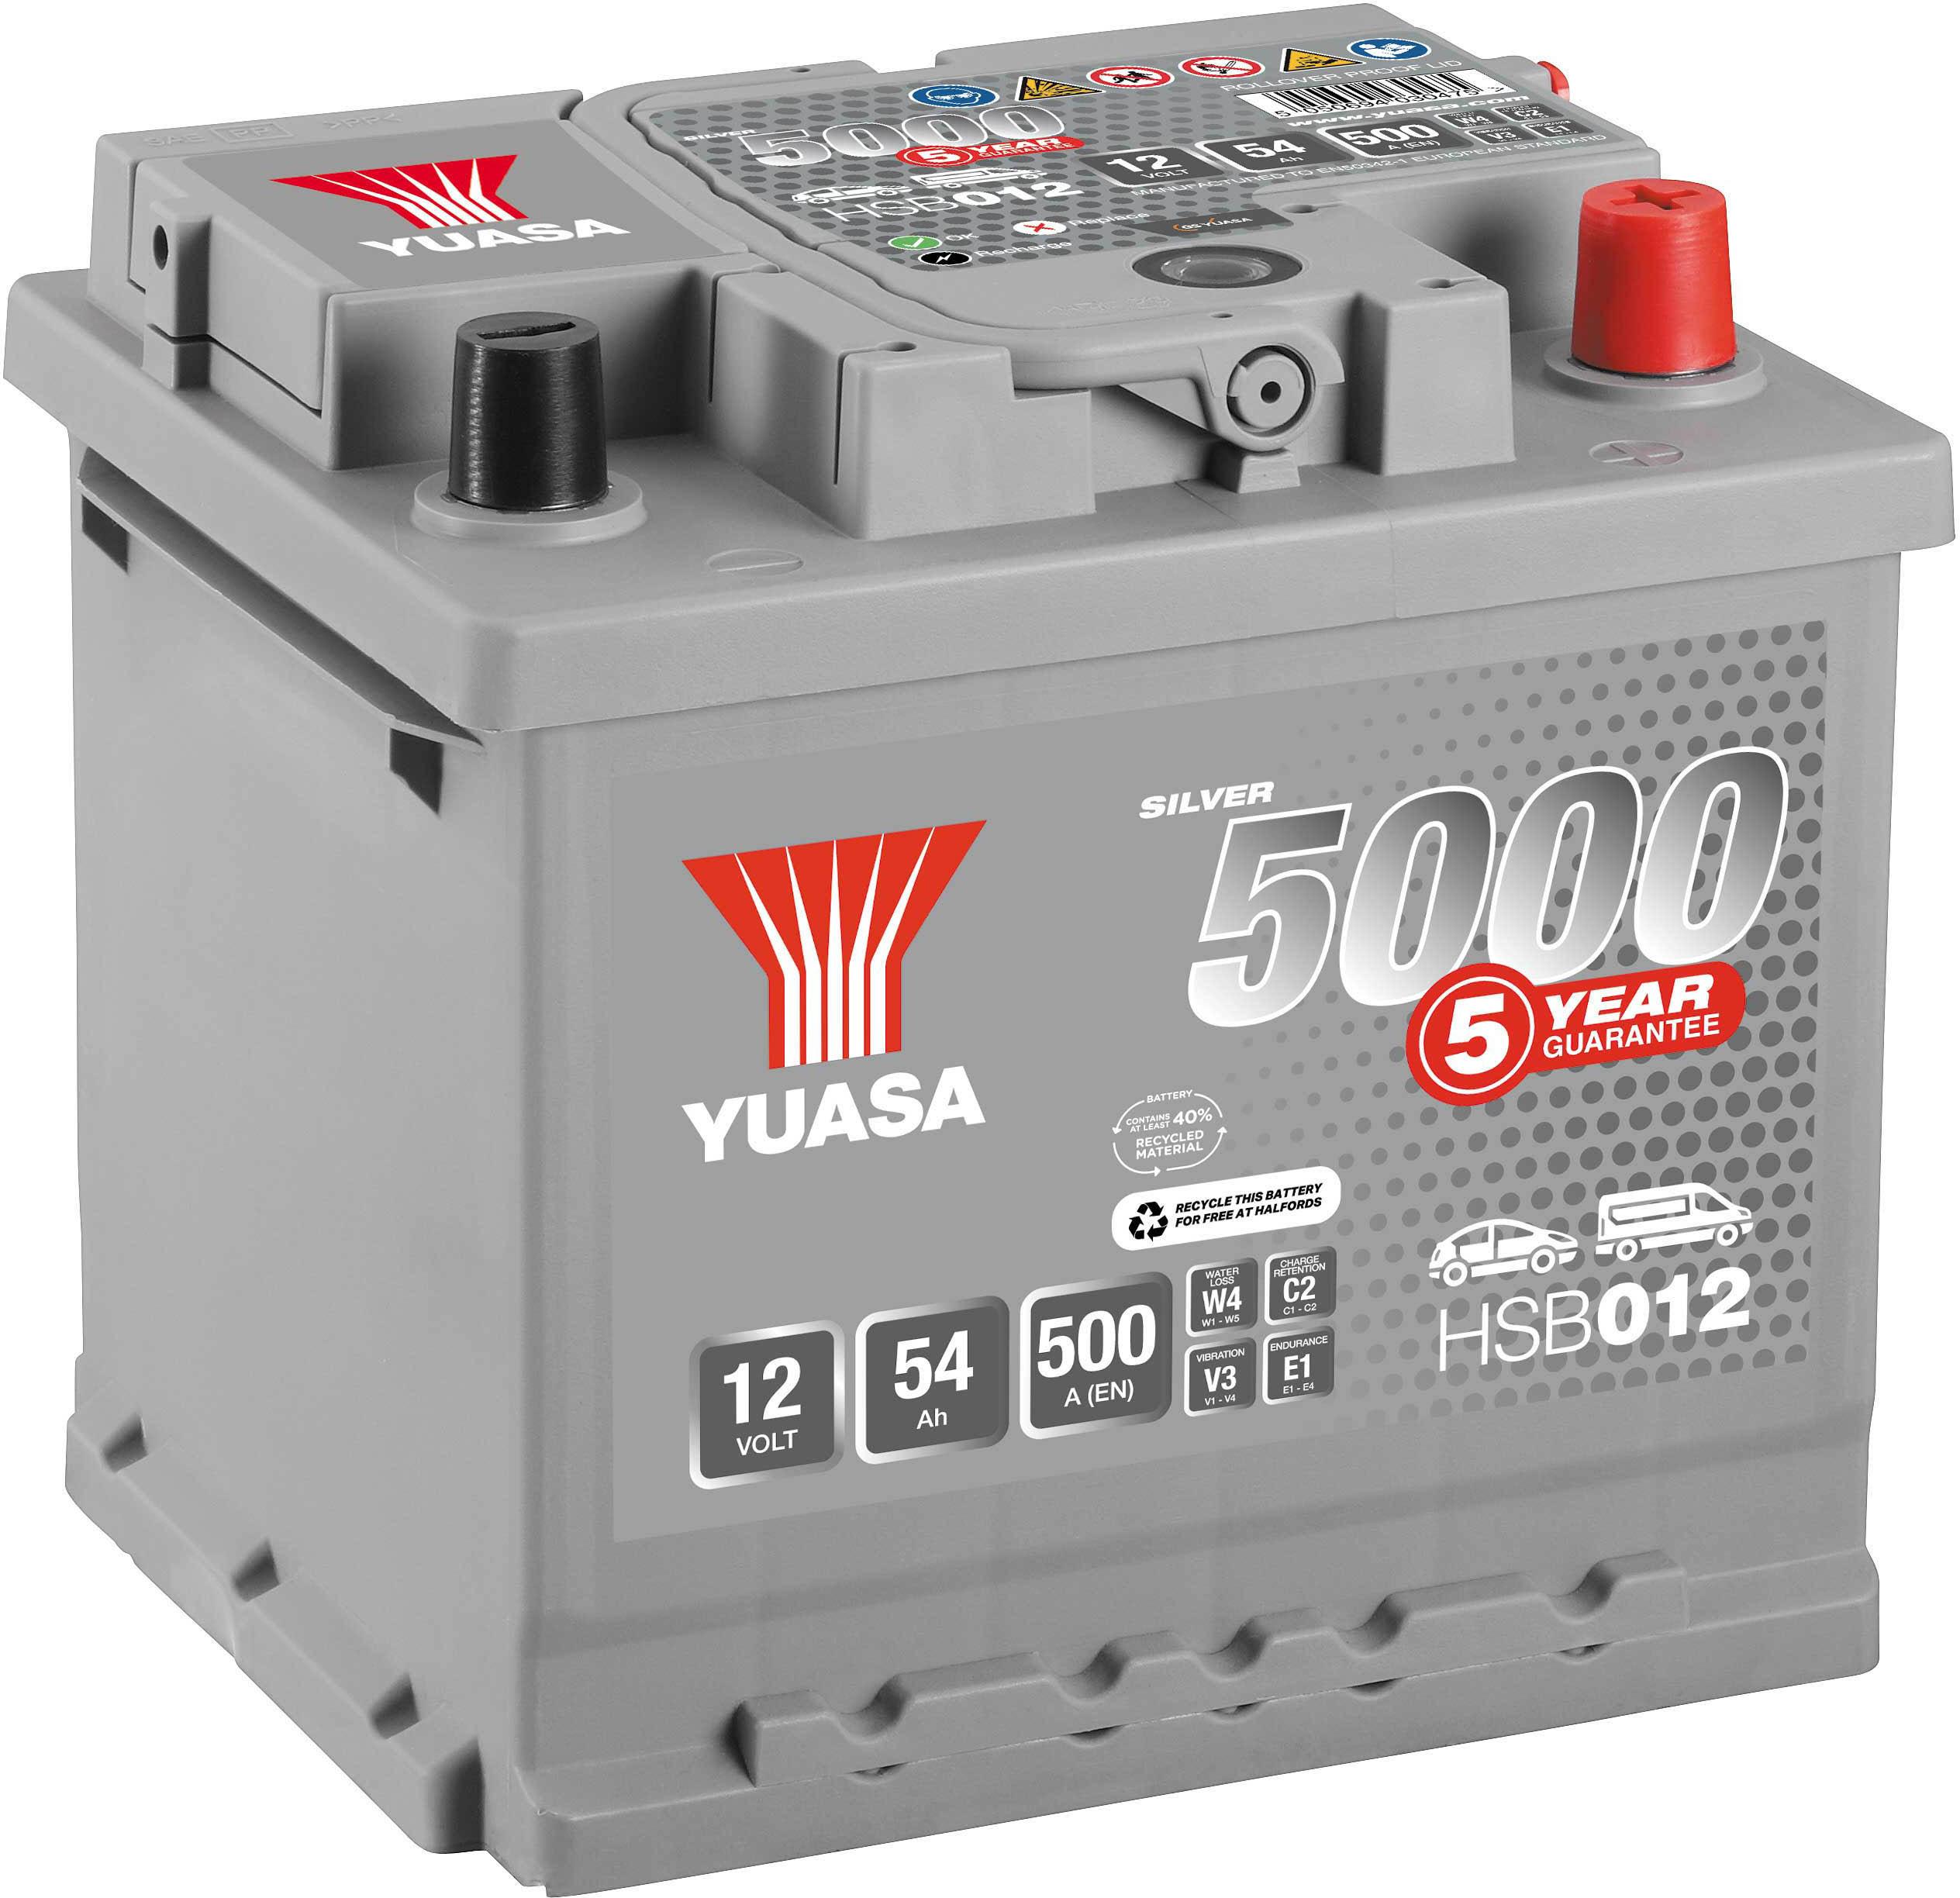 Yuasa Hsb012 Silver 12V Car Battery 5 Year Guarantee